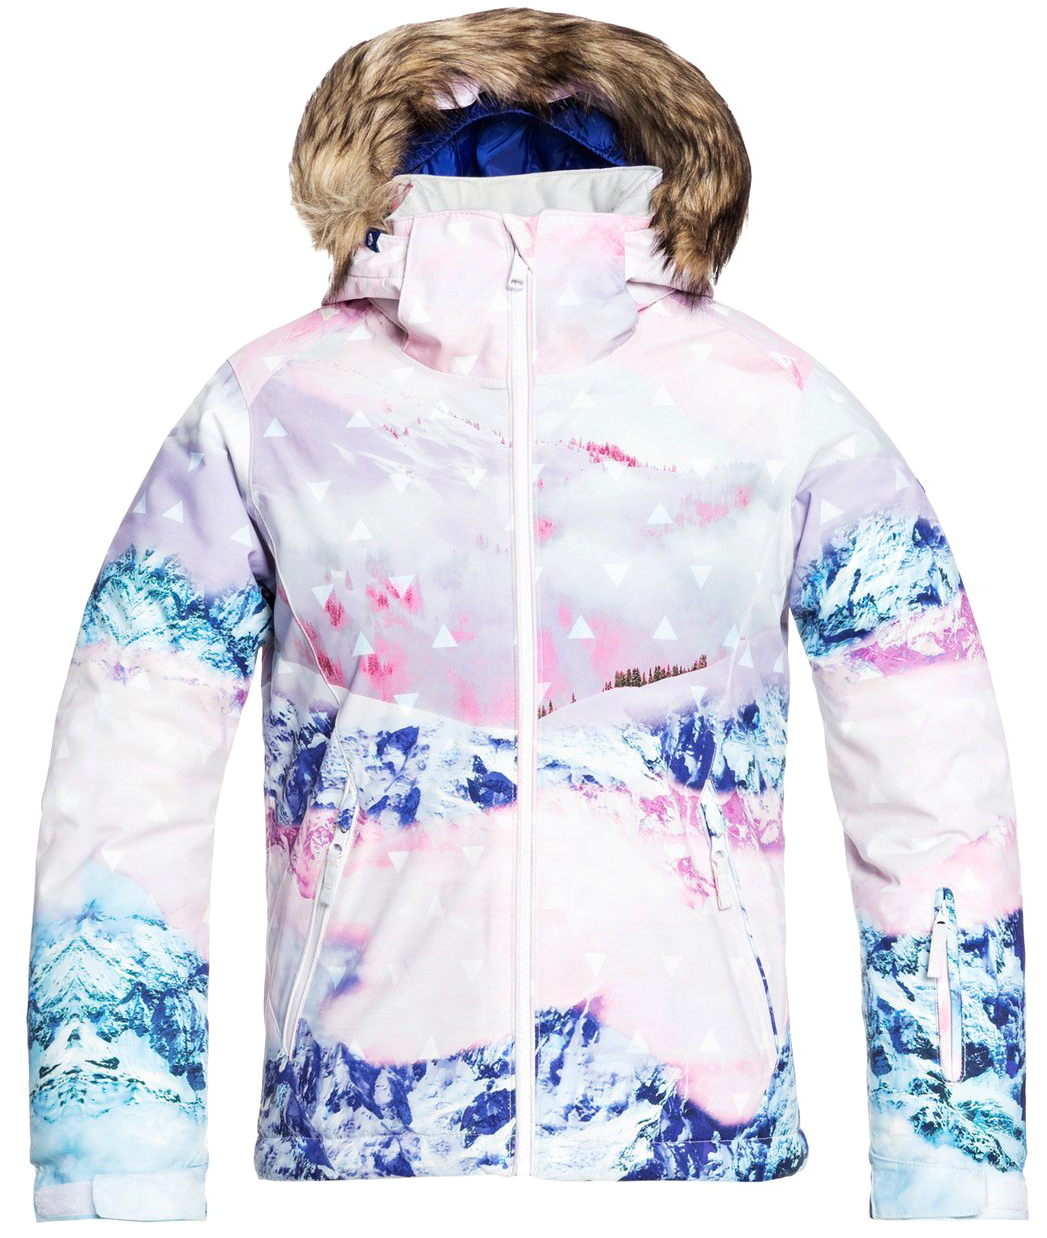 Куртка сноубордическая детская Roxy 2020-21 Jet ski SE Bright white pyrennes